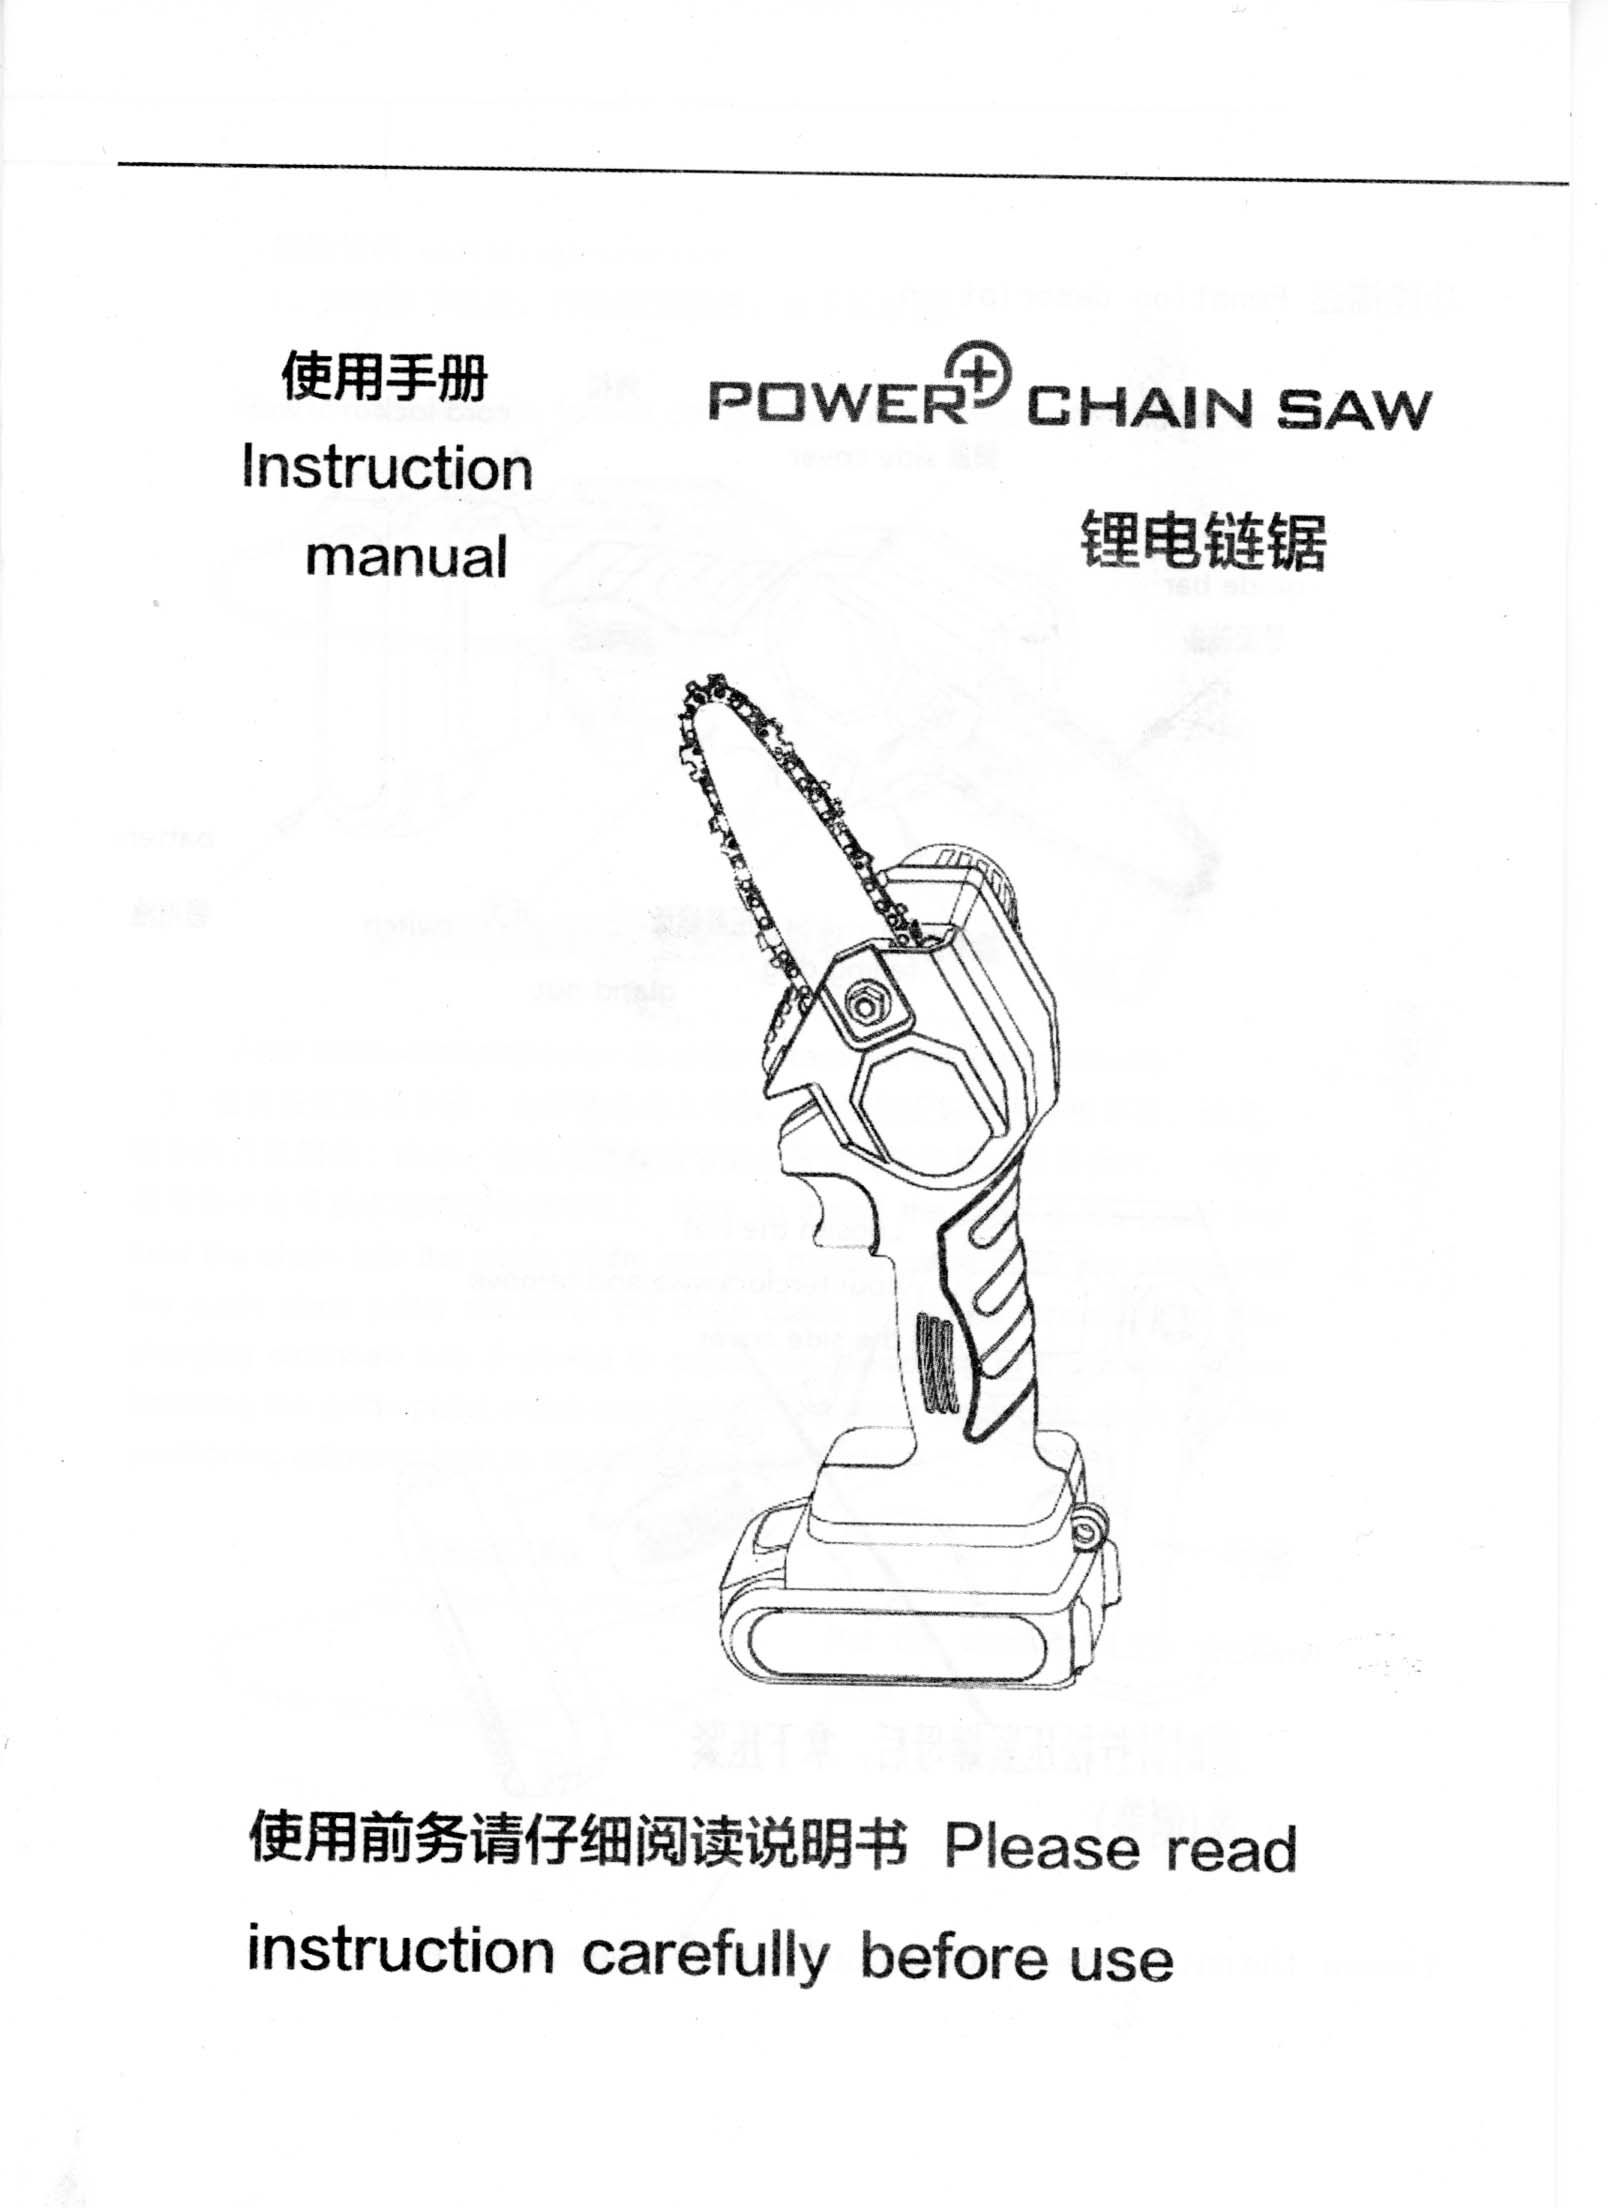 https://diywithwayne.com/wp-content/uploads/2021/11/Denqir-Pro-Chainsaw-Manual-pg-01.jpg